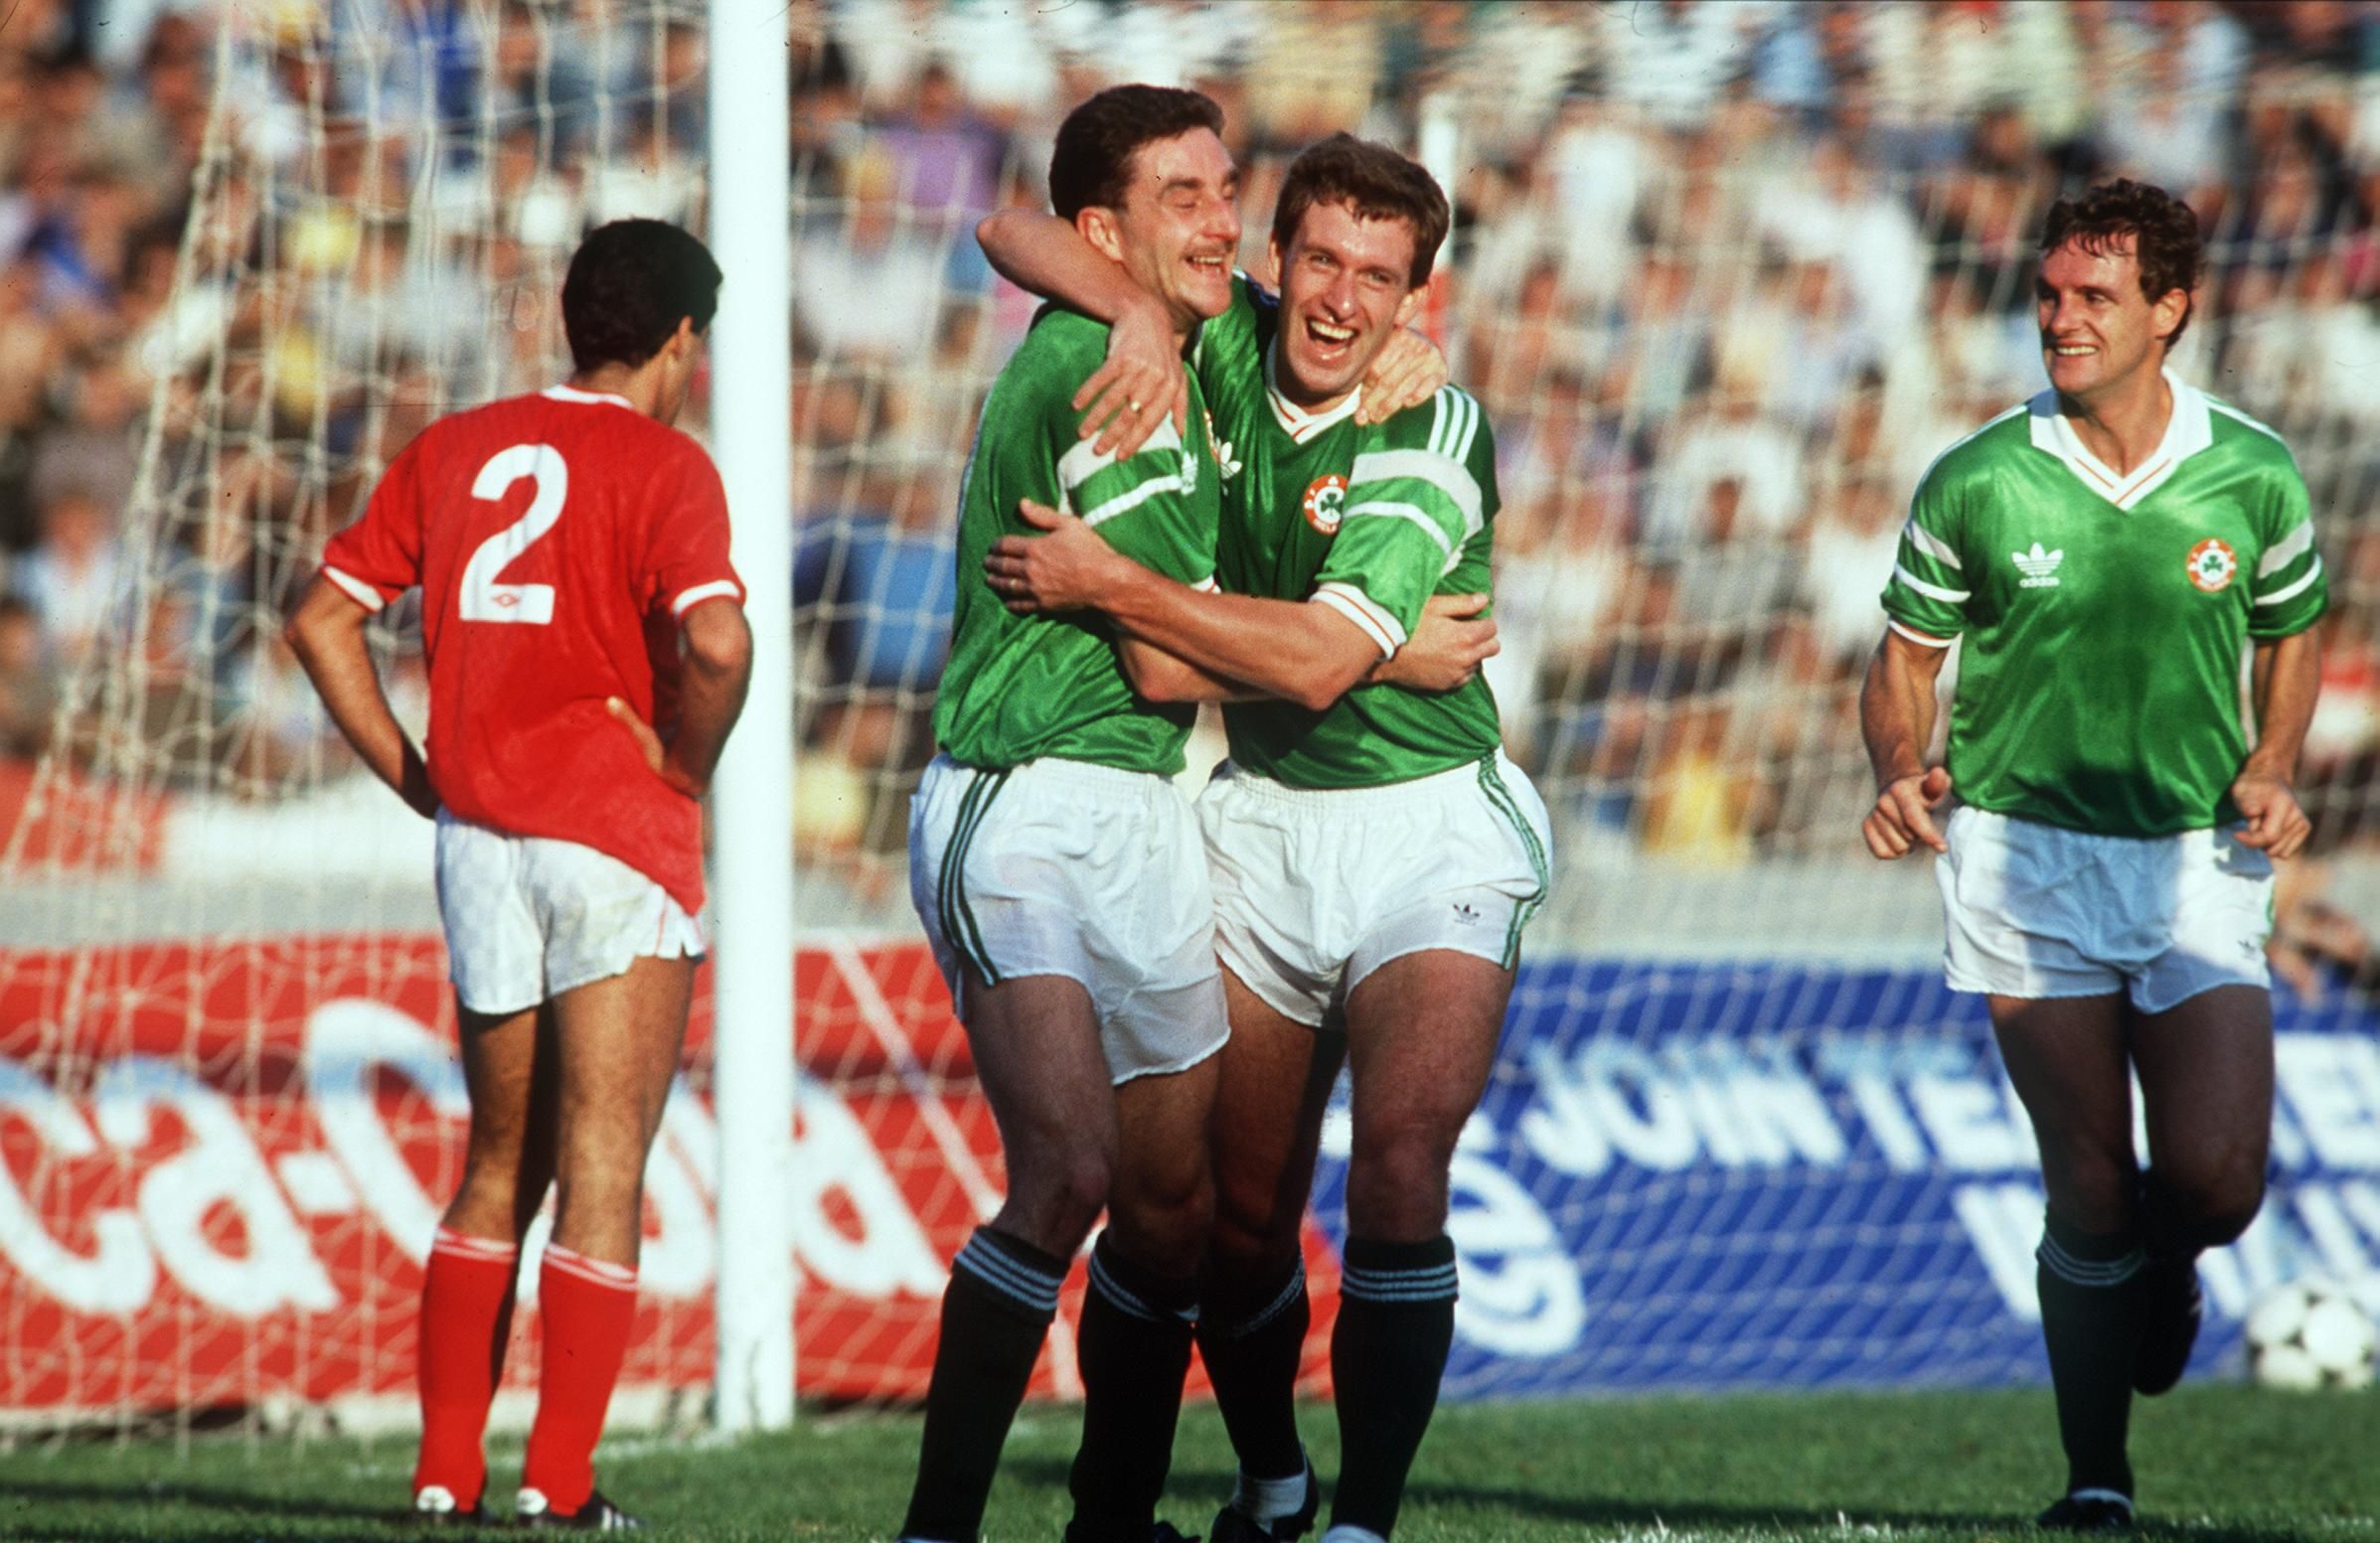 Malta vs Republic of Ireland  15/11/1989
John Aldridge and Kevin Sheedy celebrate goal
©INPHO/Billy Stickland